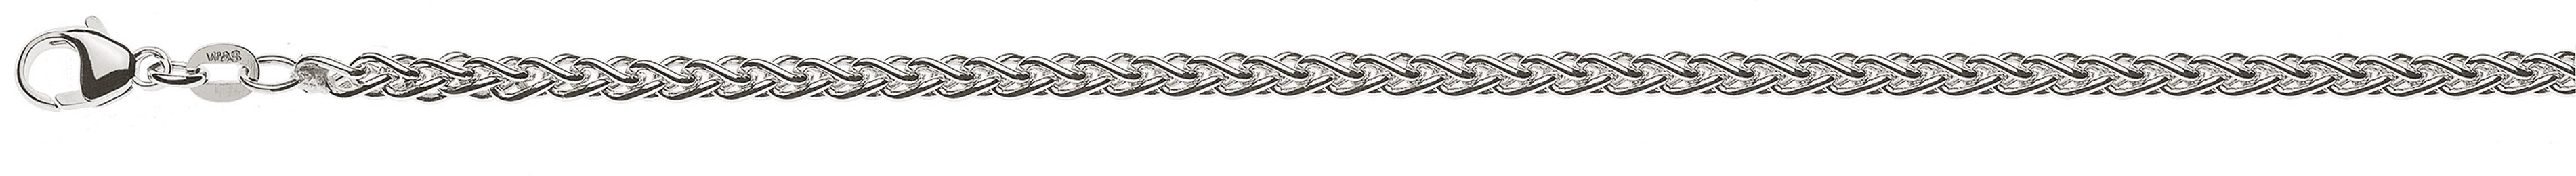 AURONOS Prestige Collier or blanc 18K chaîne câble 60cm 3.3mm